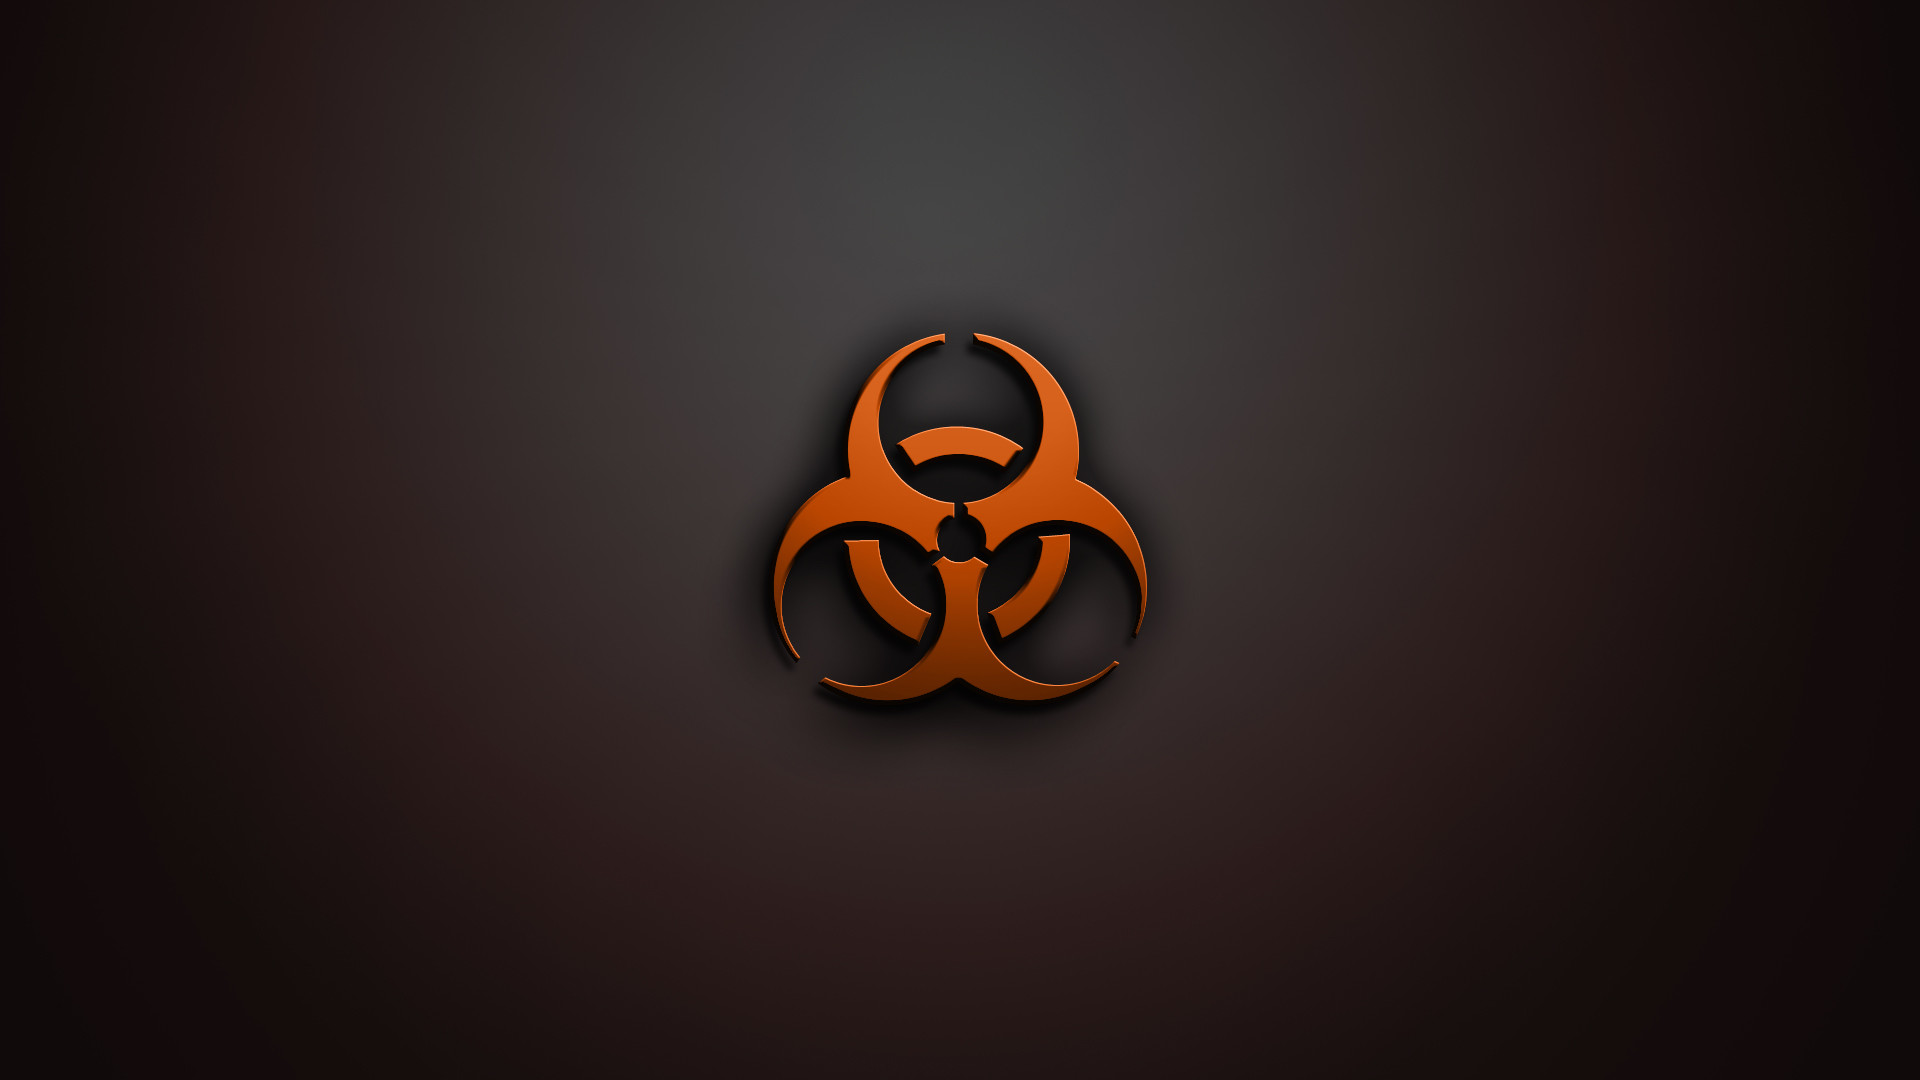 1920x1080 Biohazard Symbol Background Download Free | PixelsTalk.Net